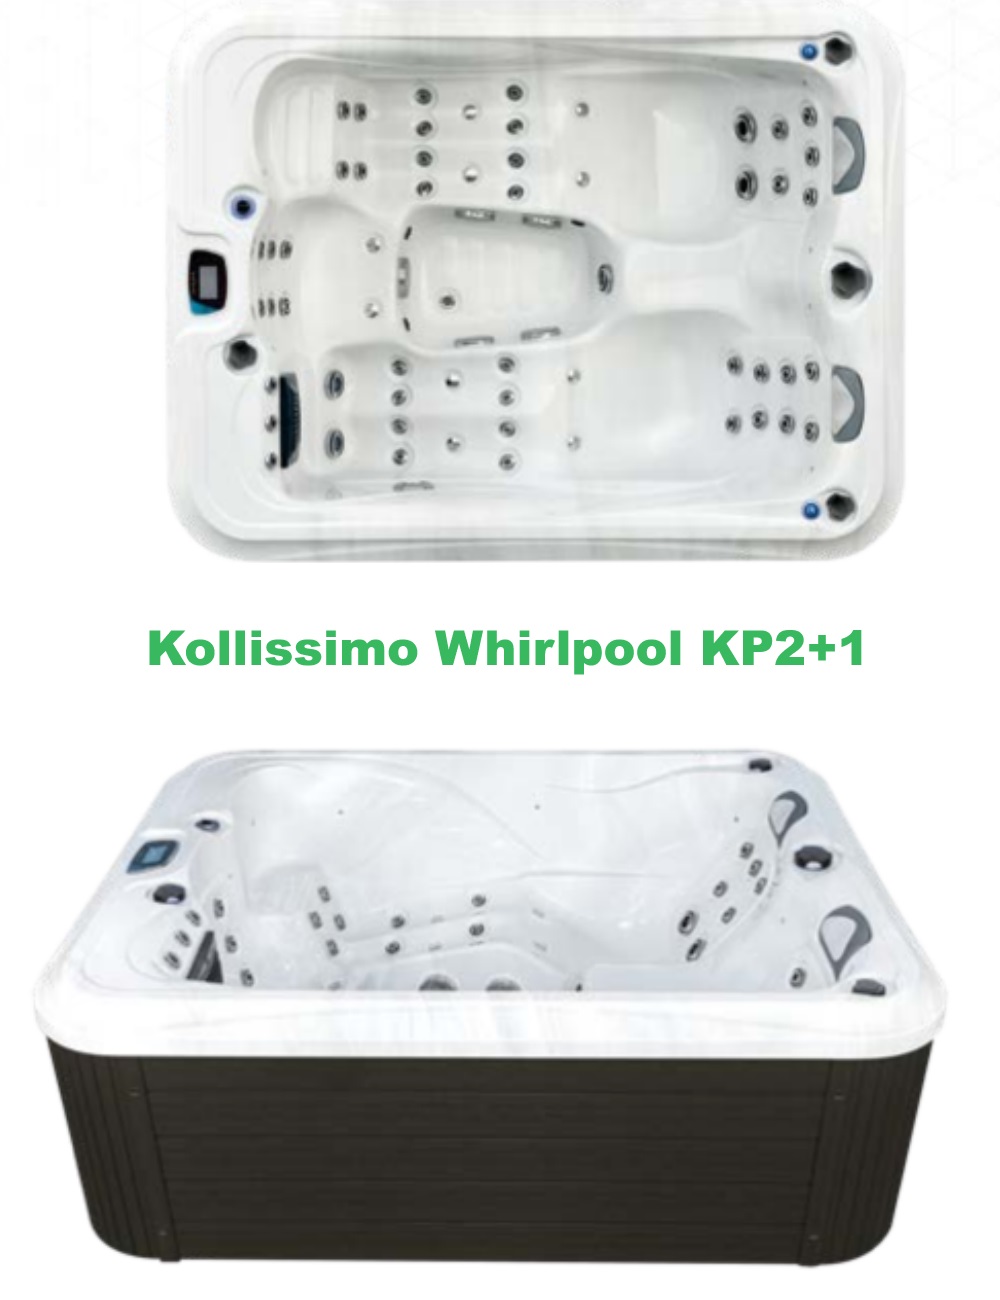 Kollissimo Whirlpool KP2+1